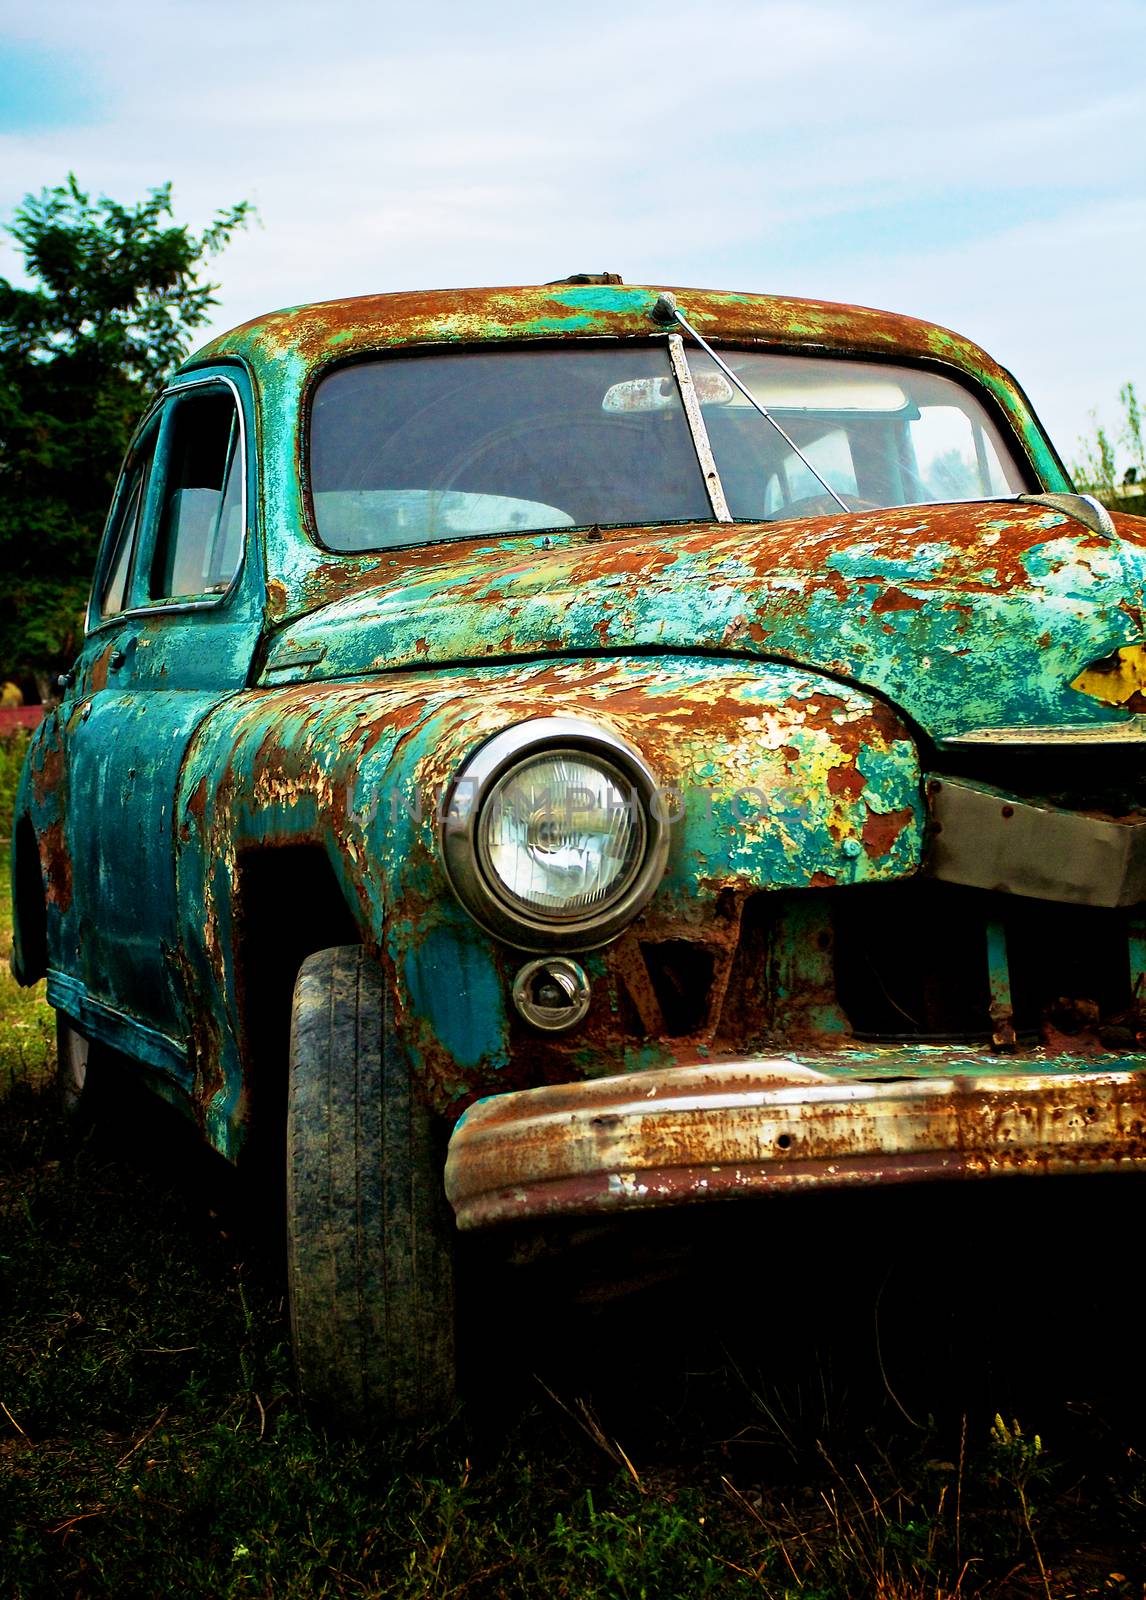 Pimped Rusty Car by zhekos